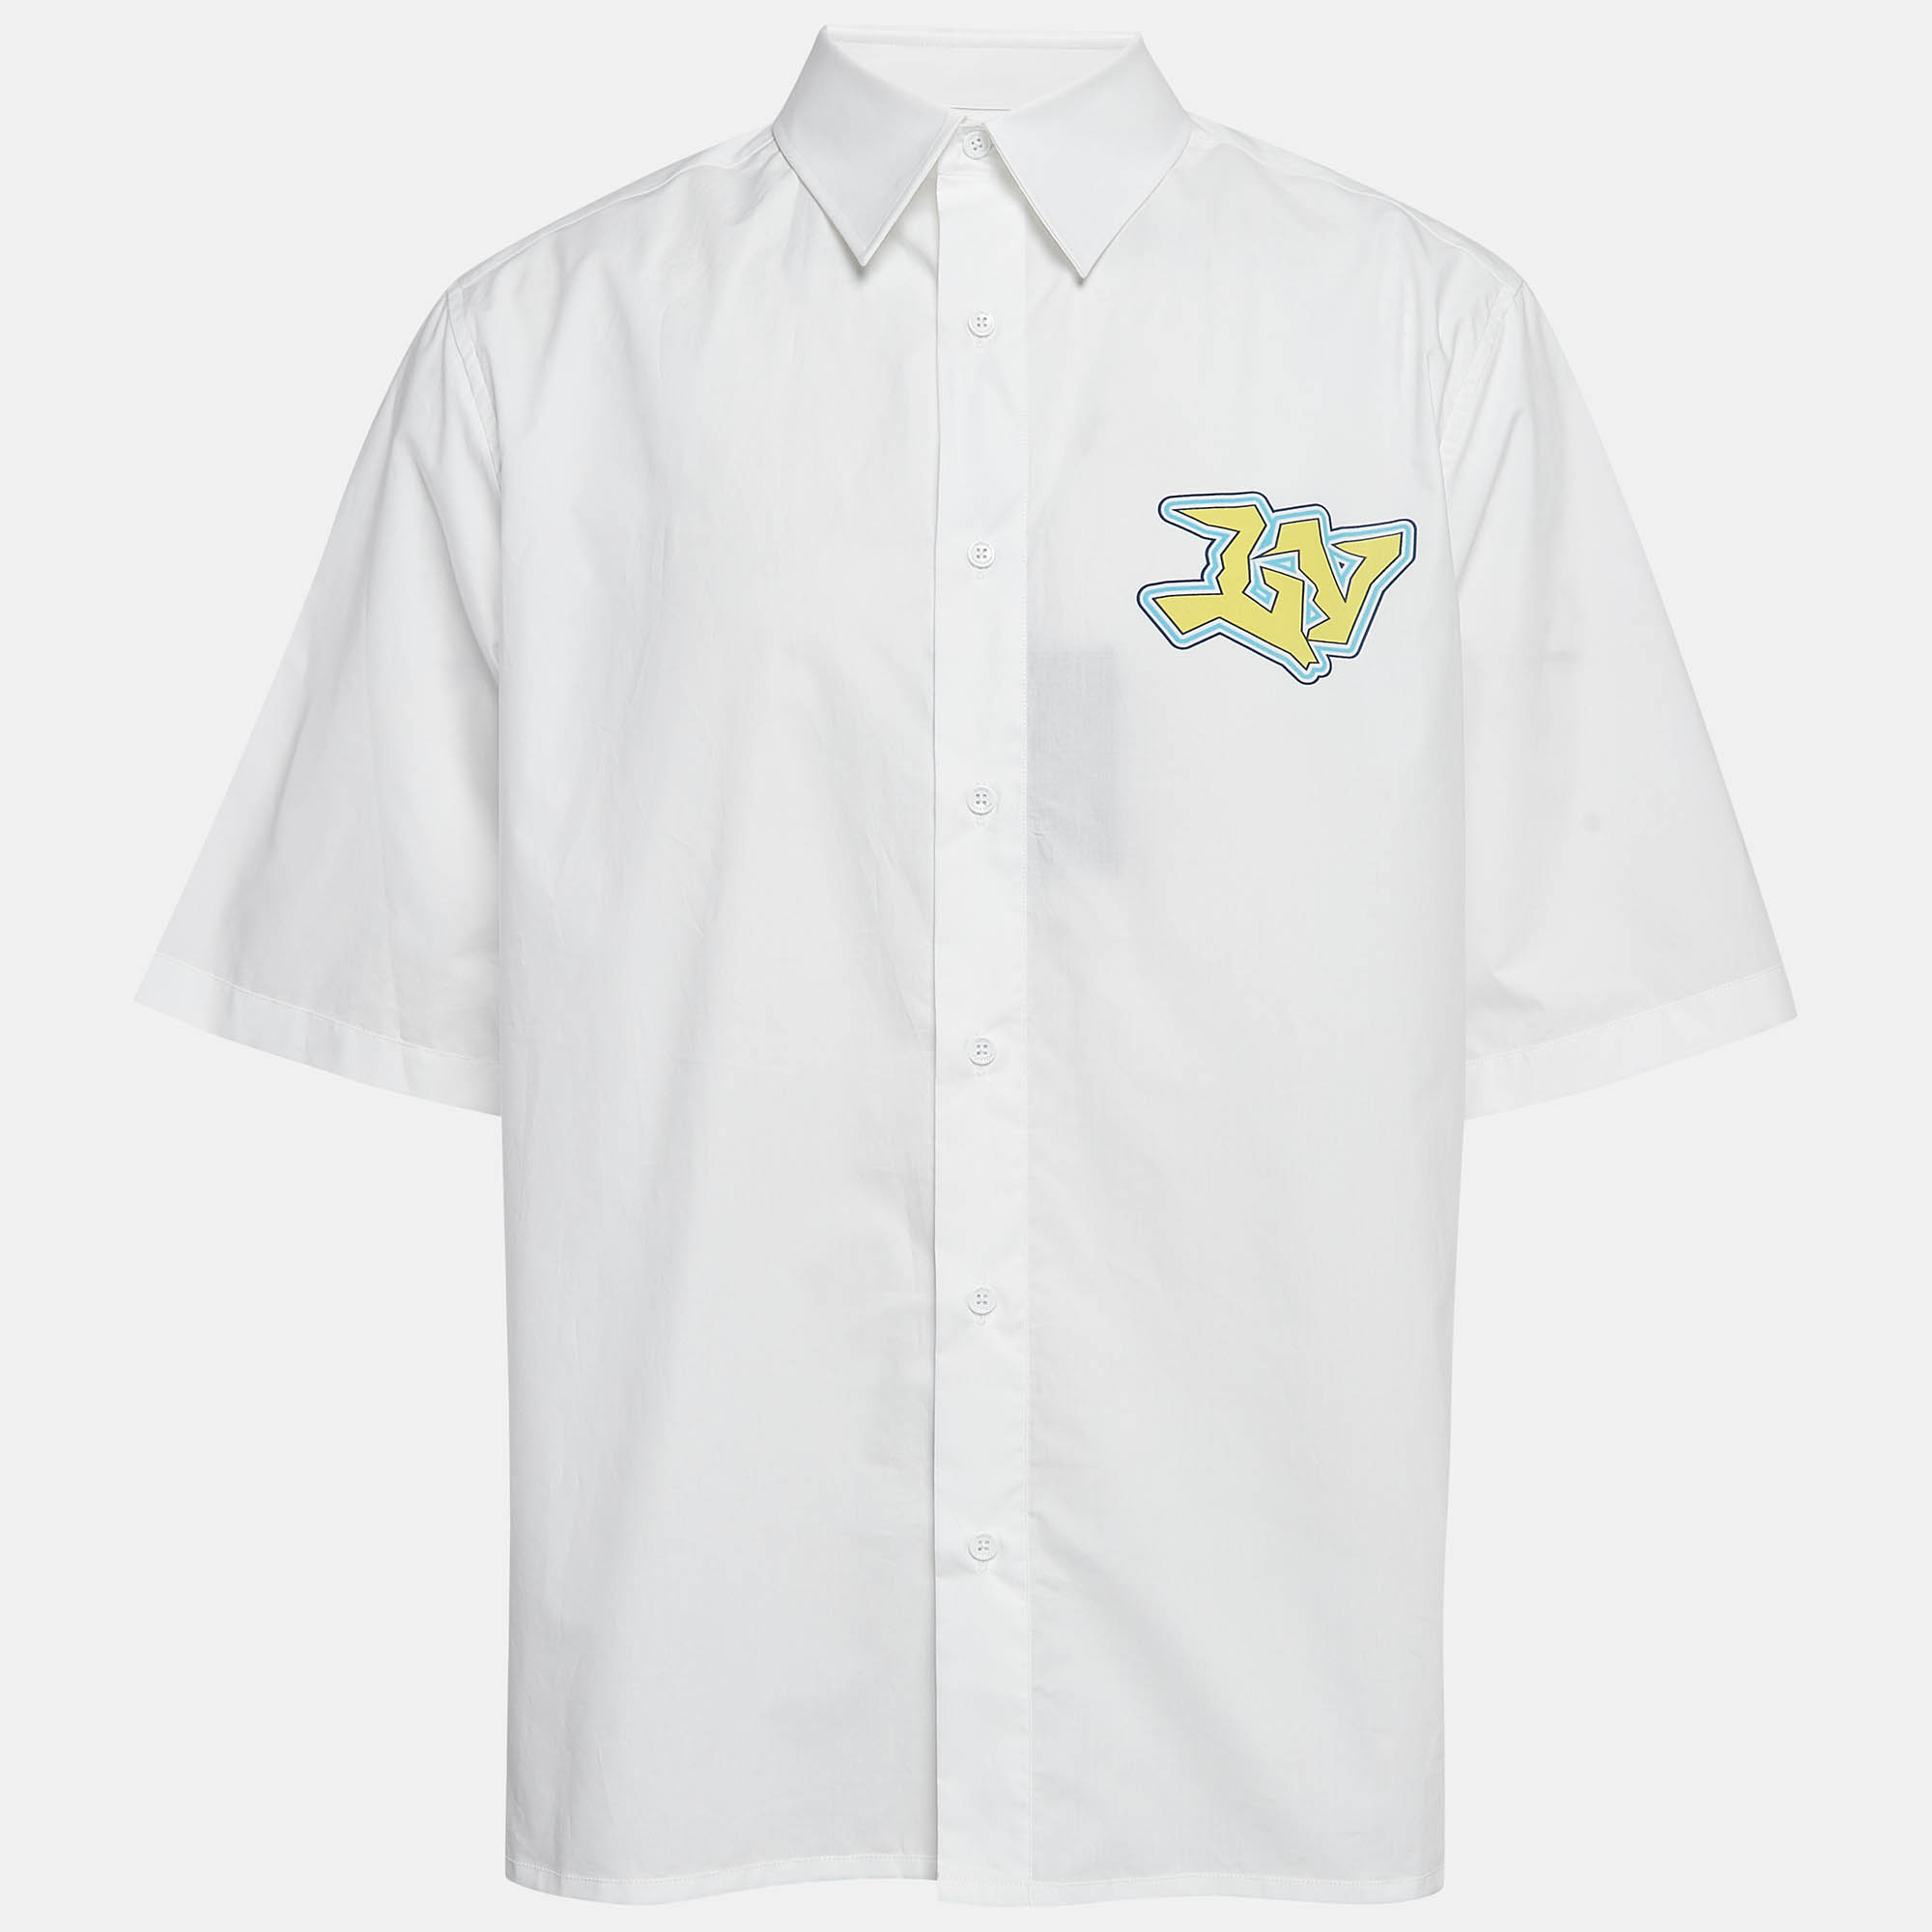 Louis vuitton white printed cotton short sleeve shirt xl